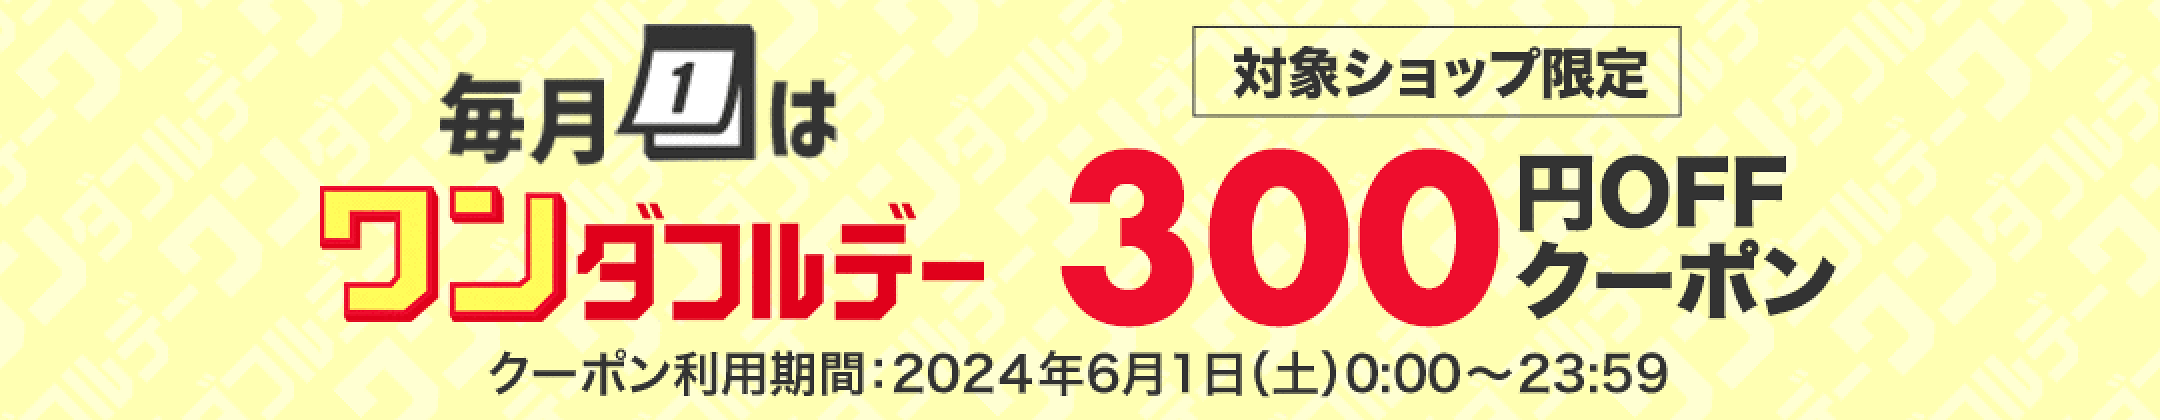 【JUNE WONDERFUL DAY】300円OFF